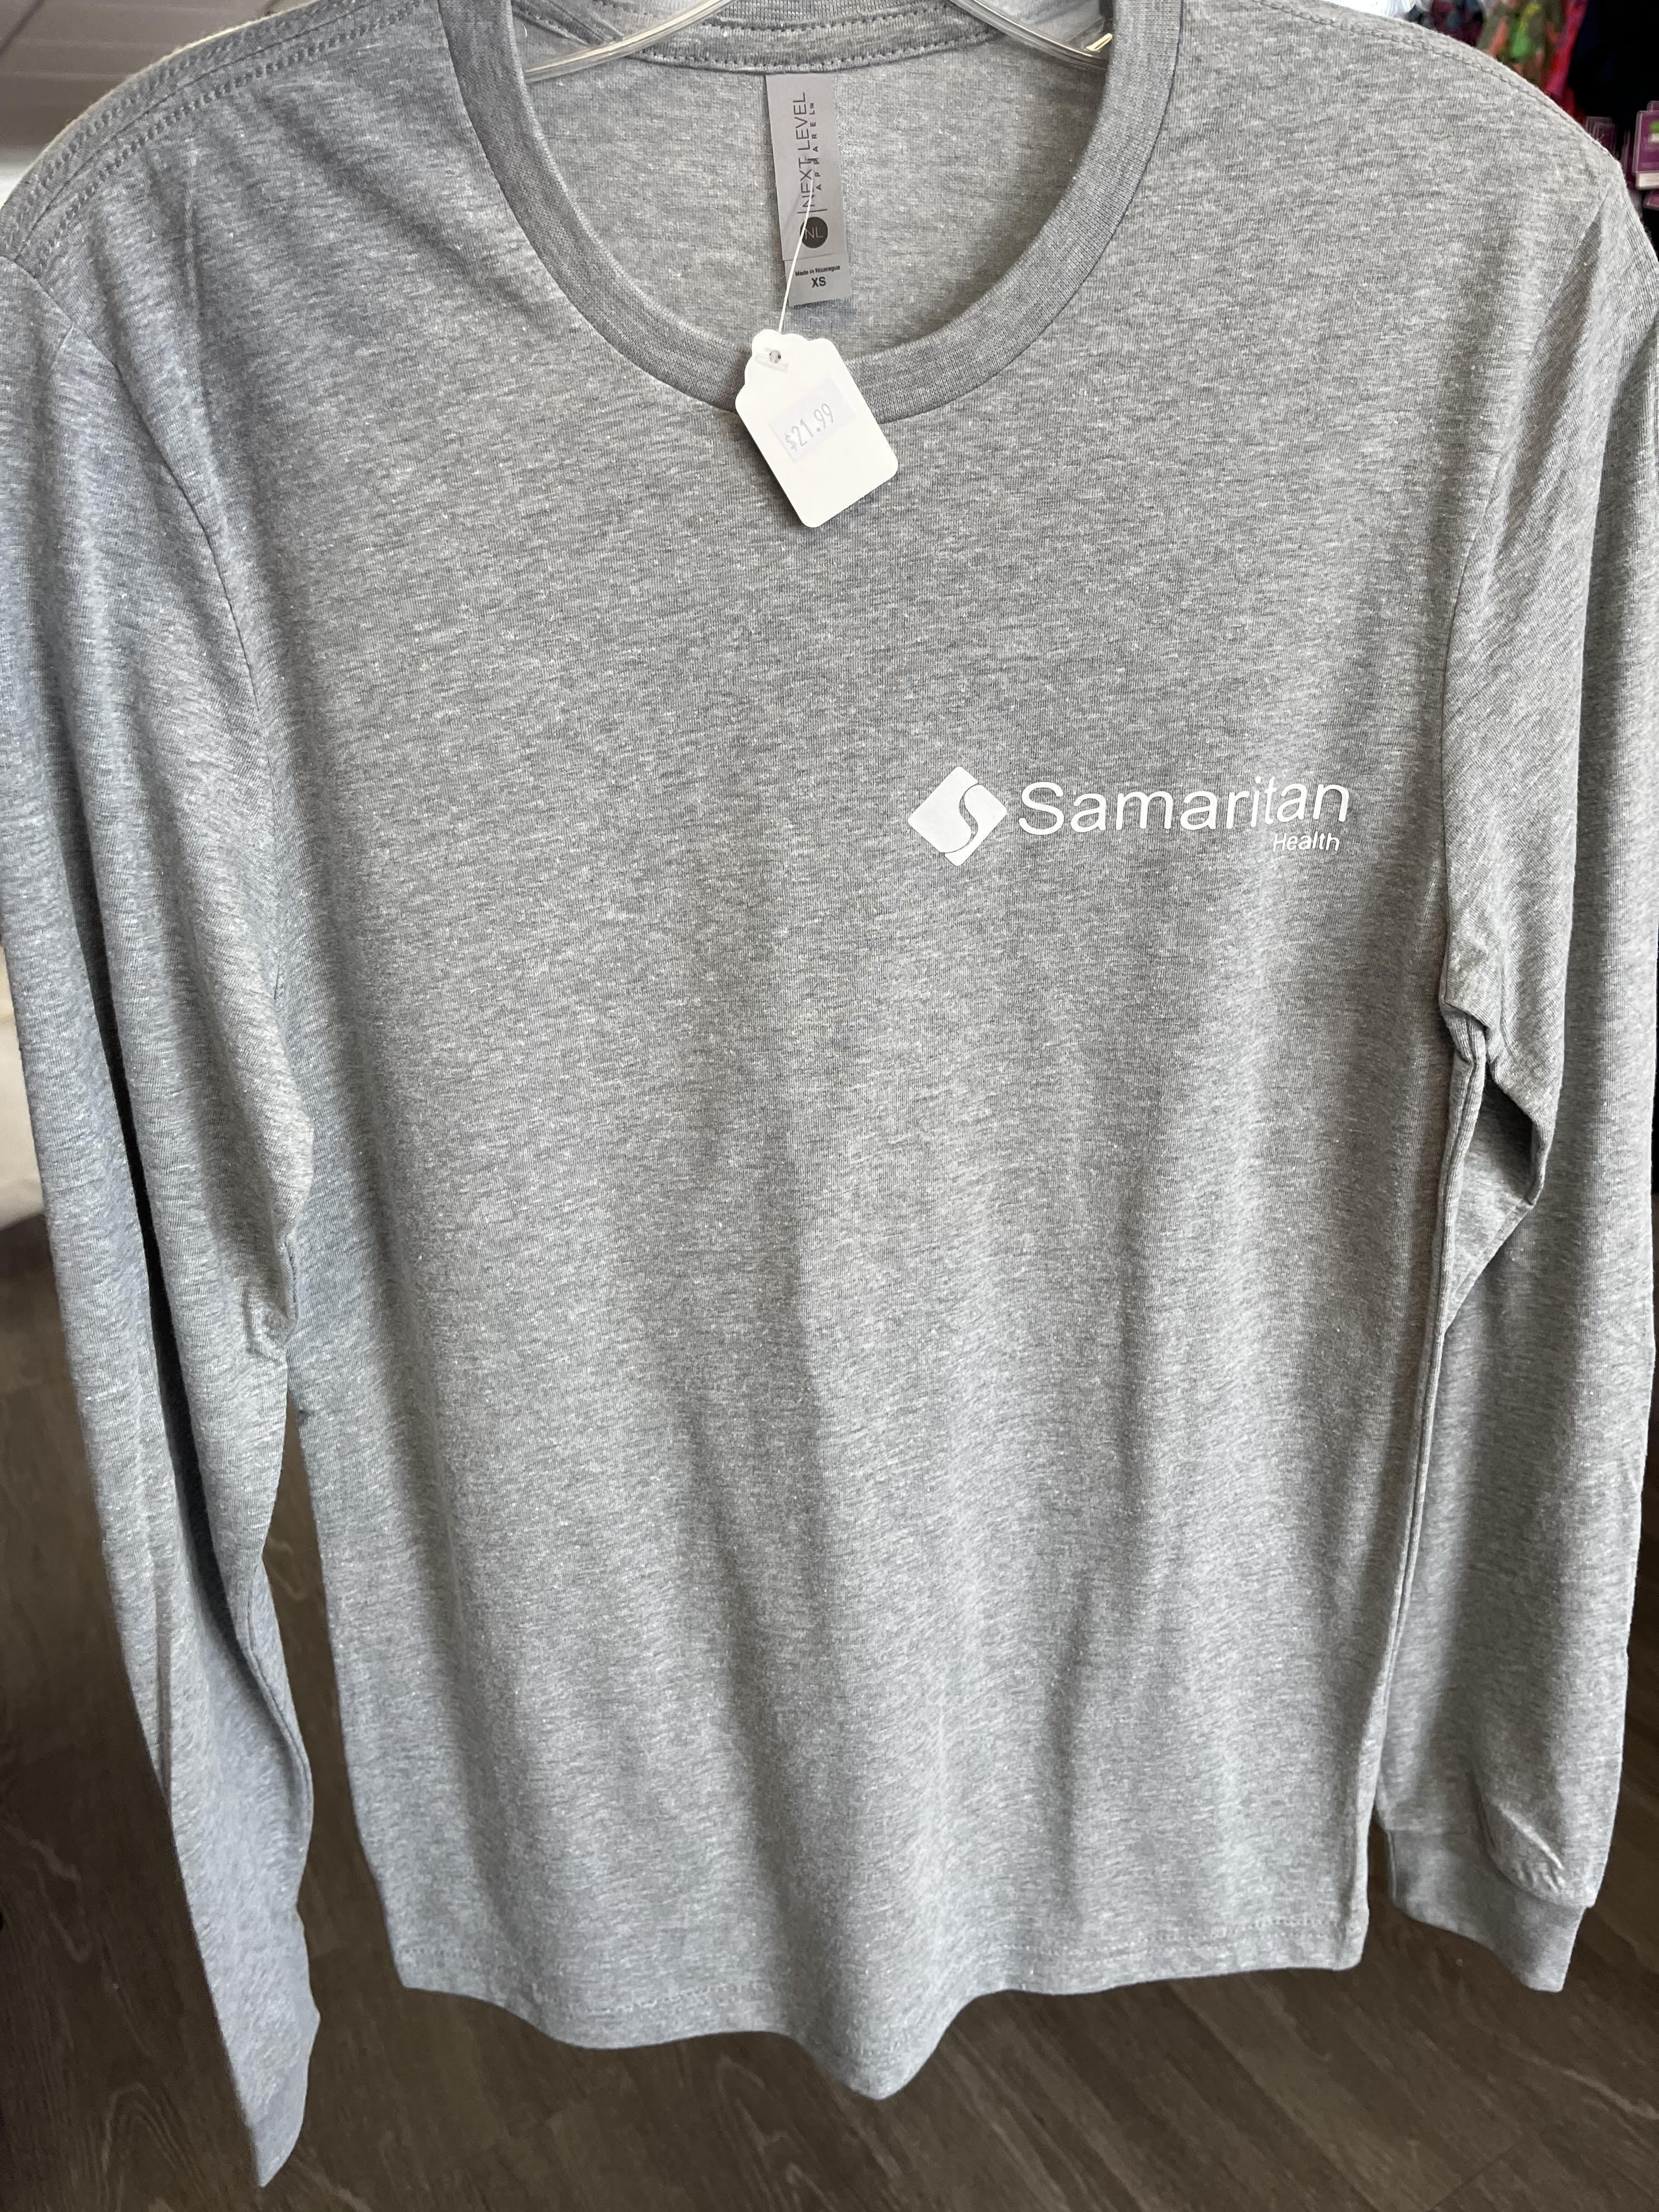 SMC long sleeve heather grey t shirt -The Scrub Hub